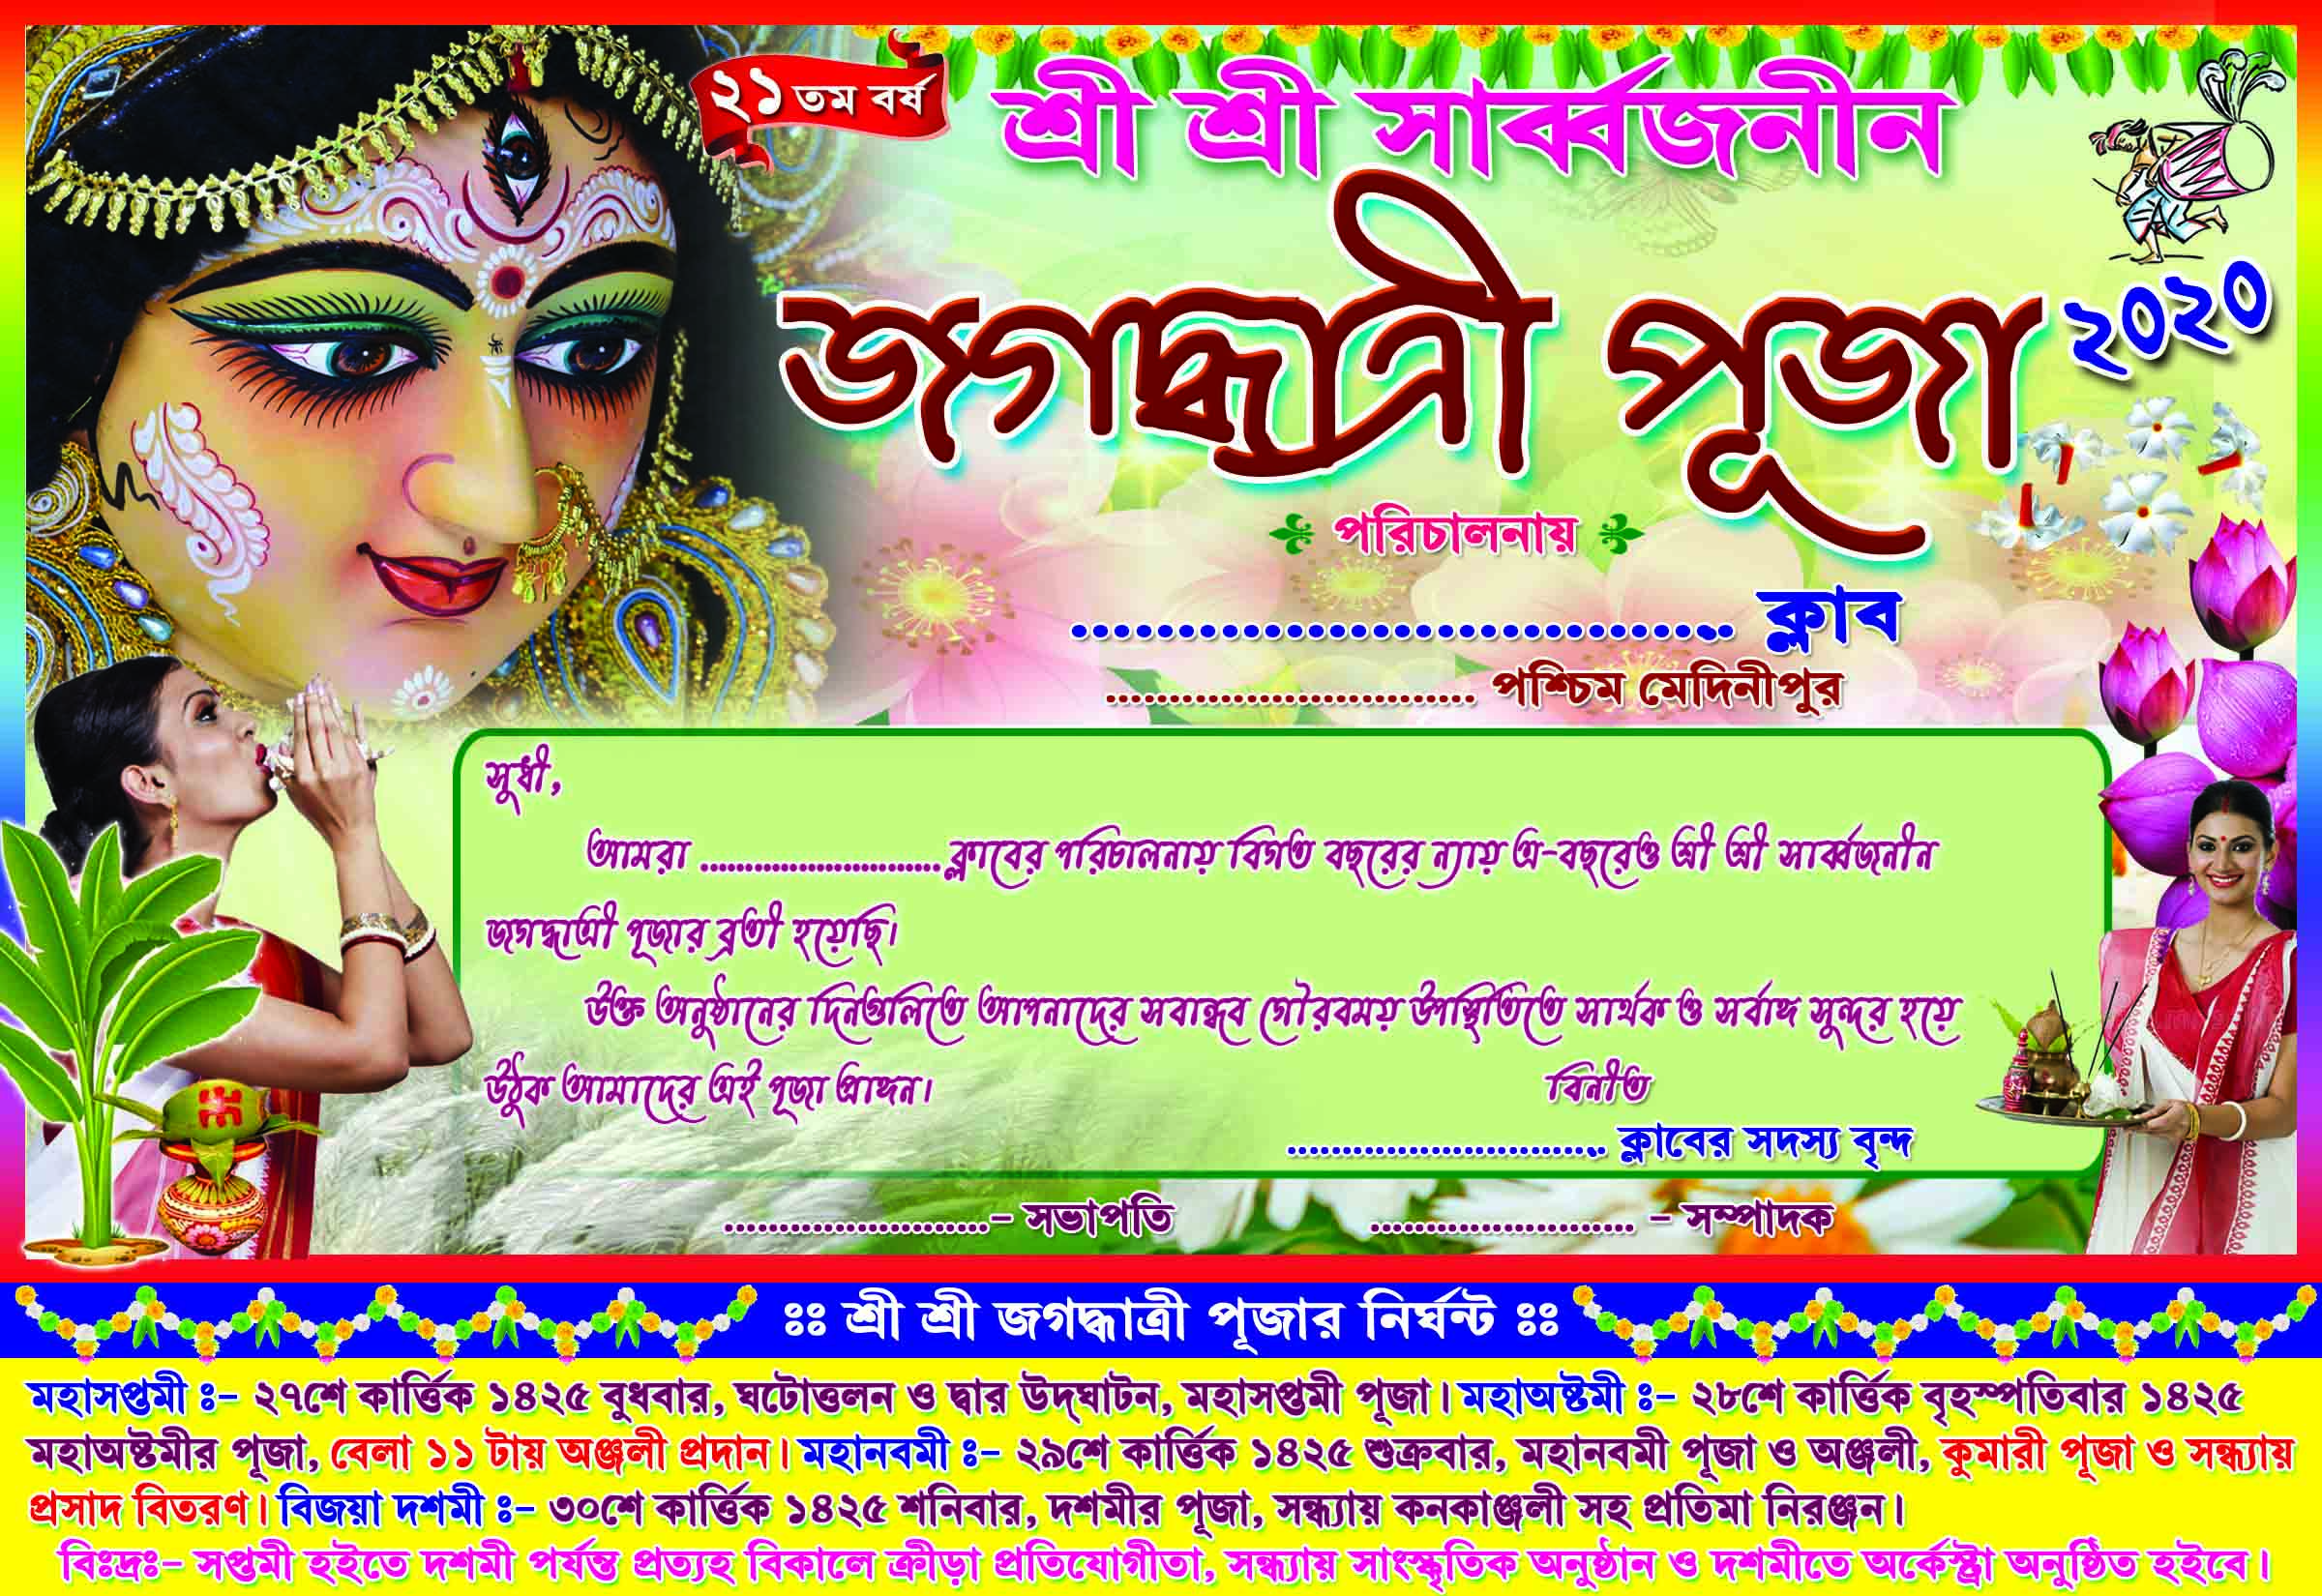 durga puja invitation card in bengali » Picture Density